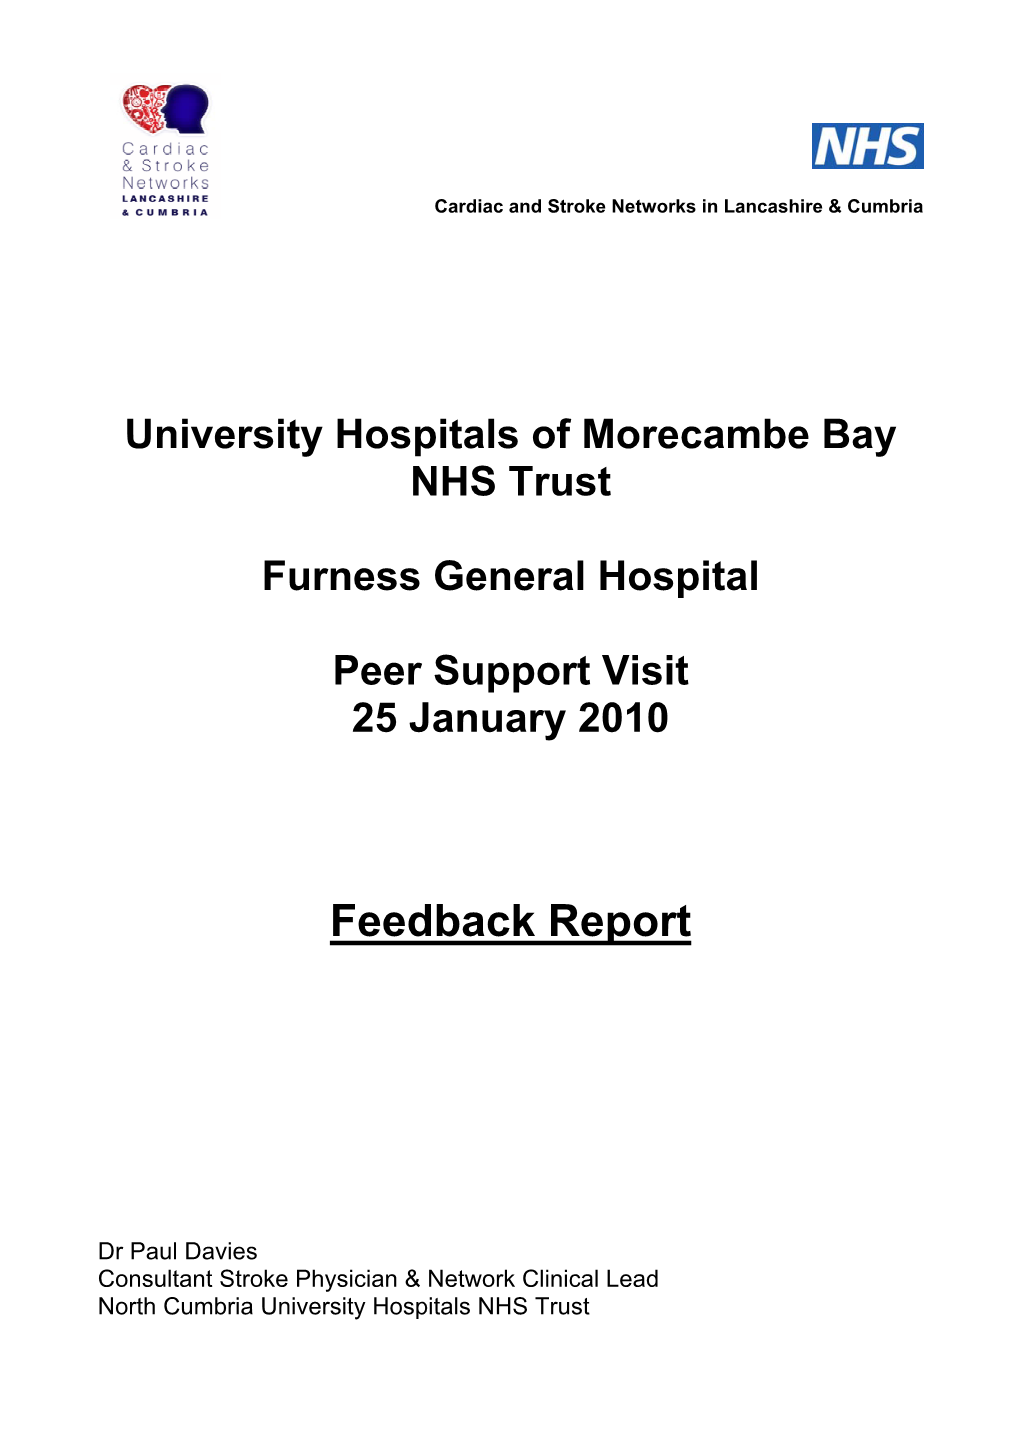 University Hospitals of Morecambe Bay NHS Trust Furness General